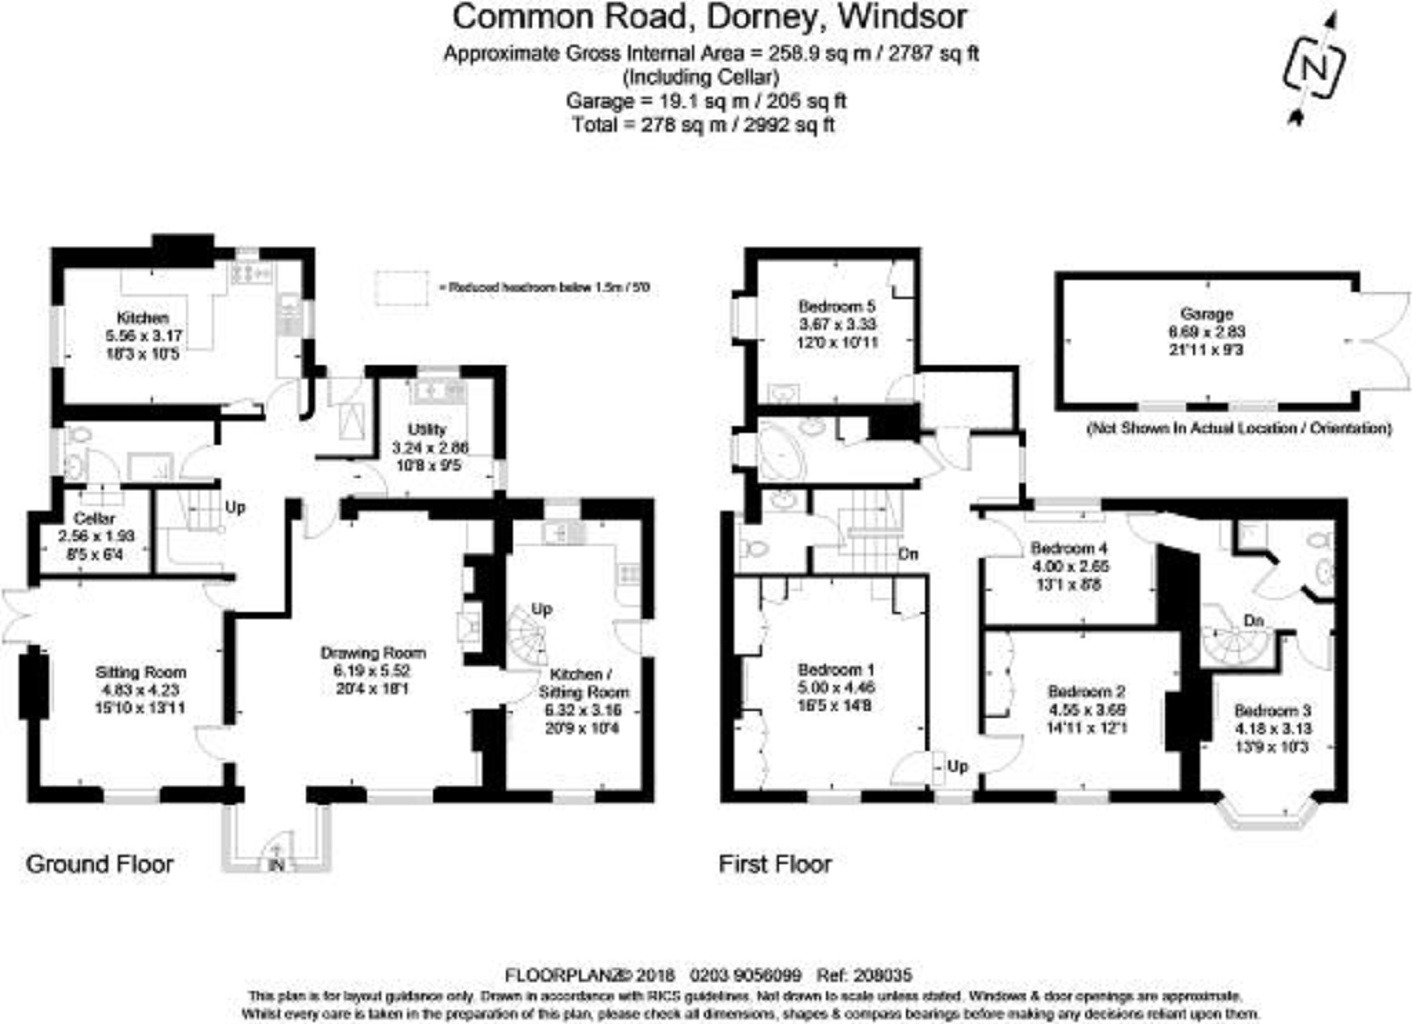 6 Bedrooms Detached house for sale in Common Road, Dorney, Windsor SL4